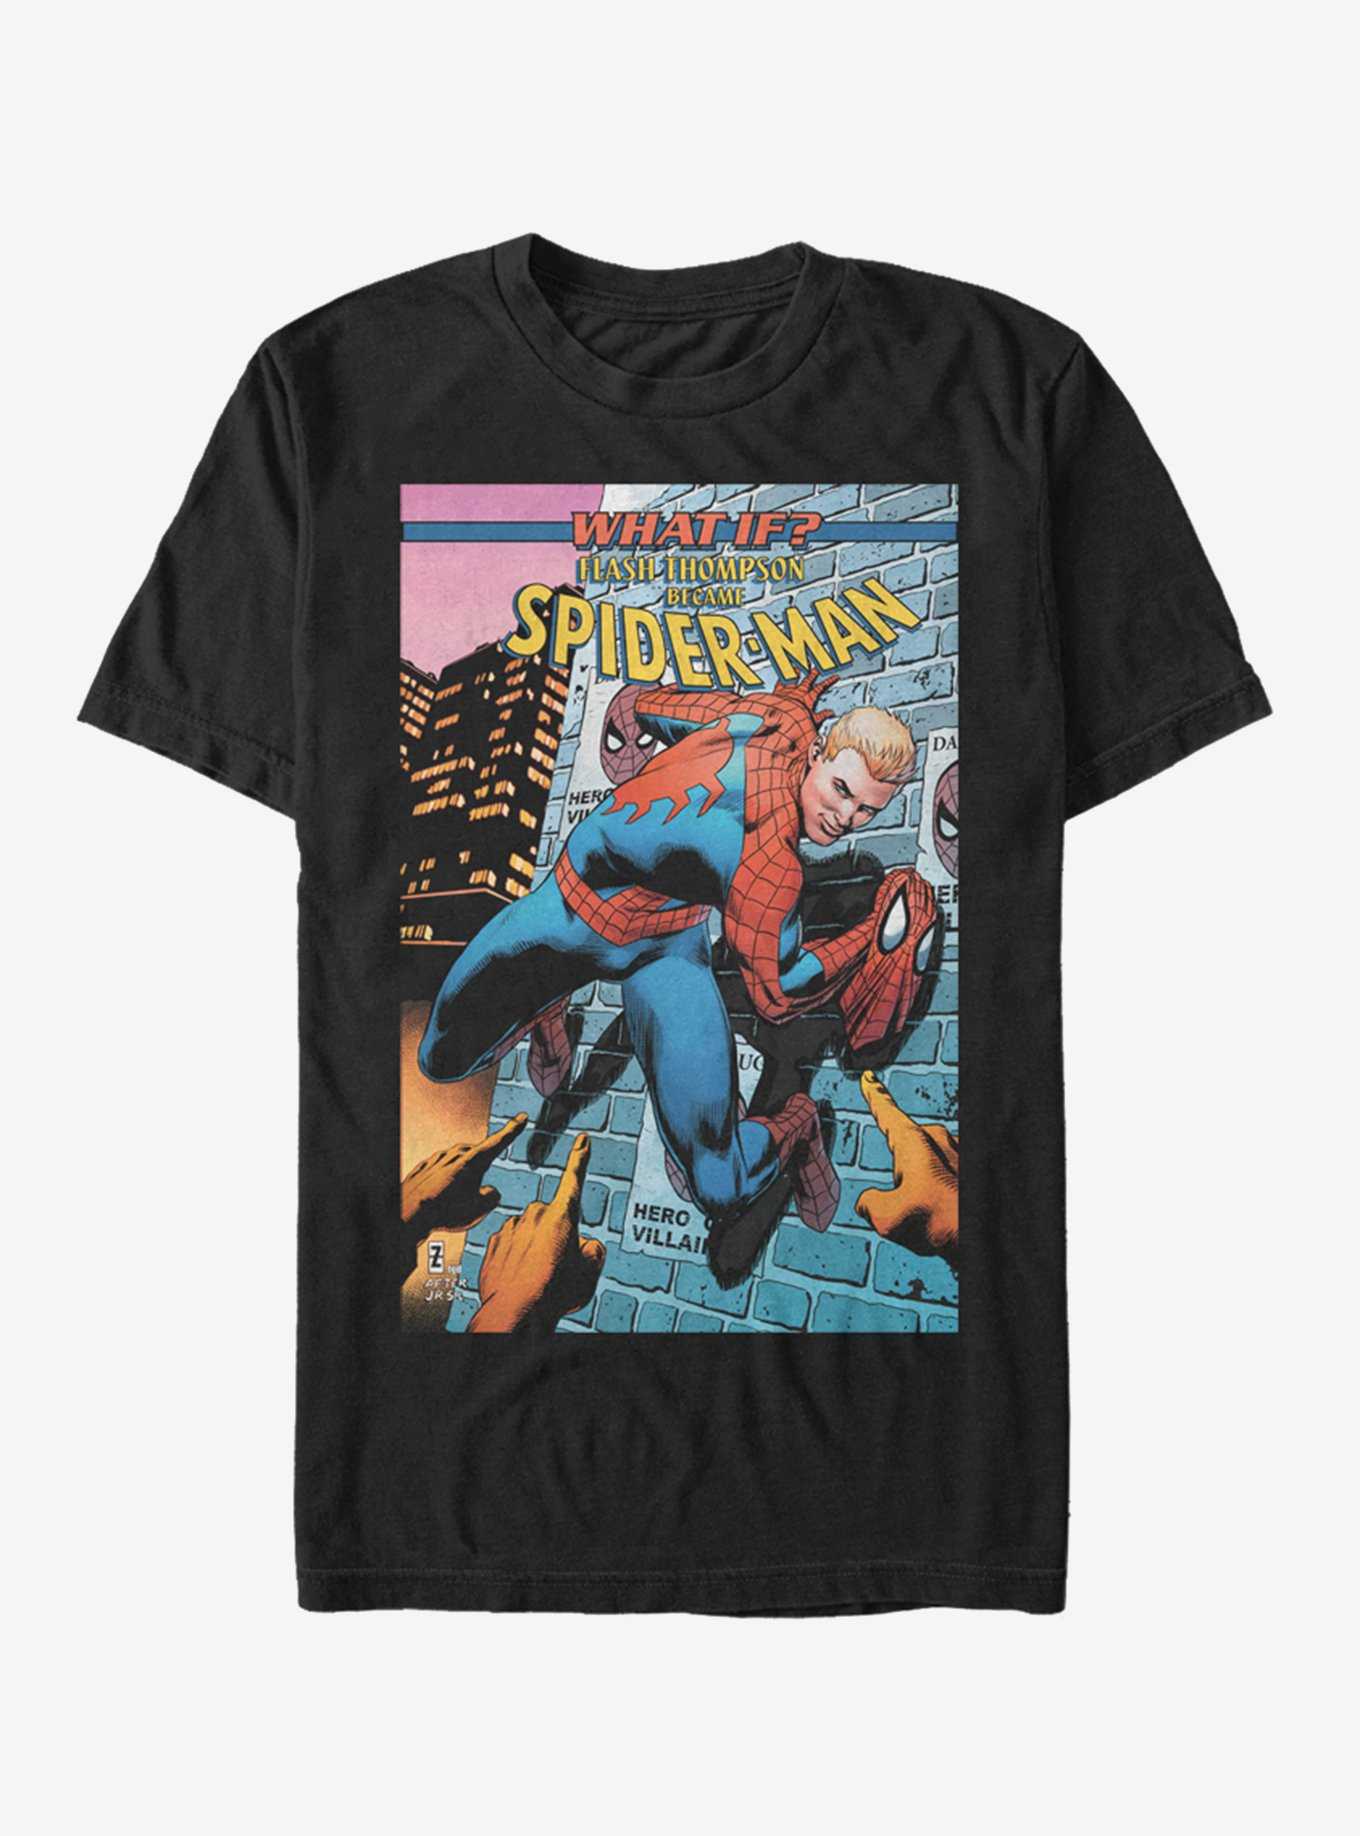 Marvel Spider-Man Flash Thompson Spider-Man Oct.18 T-Shirt, , hi-res